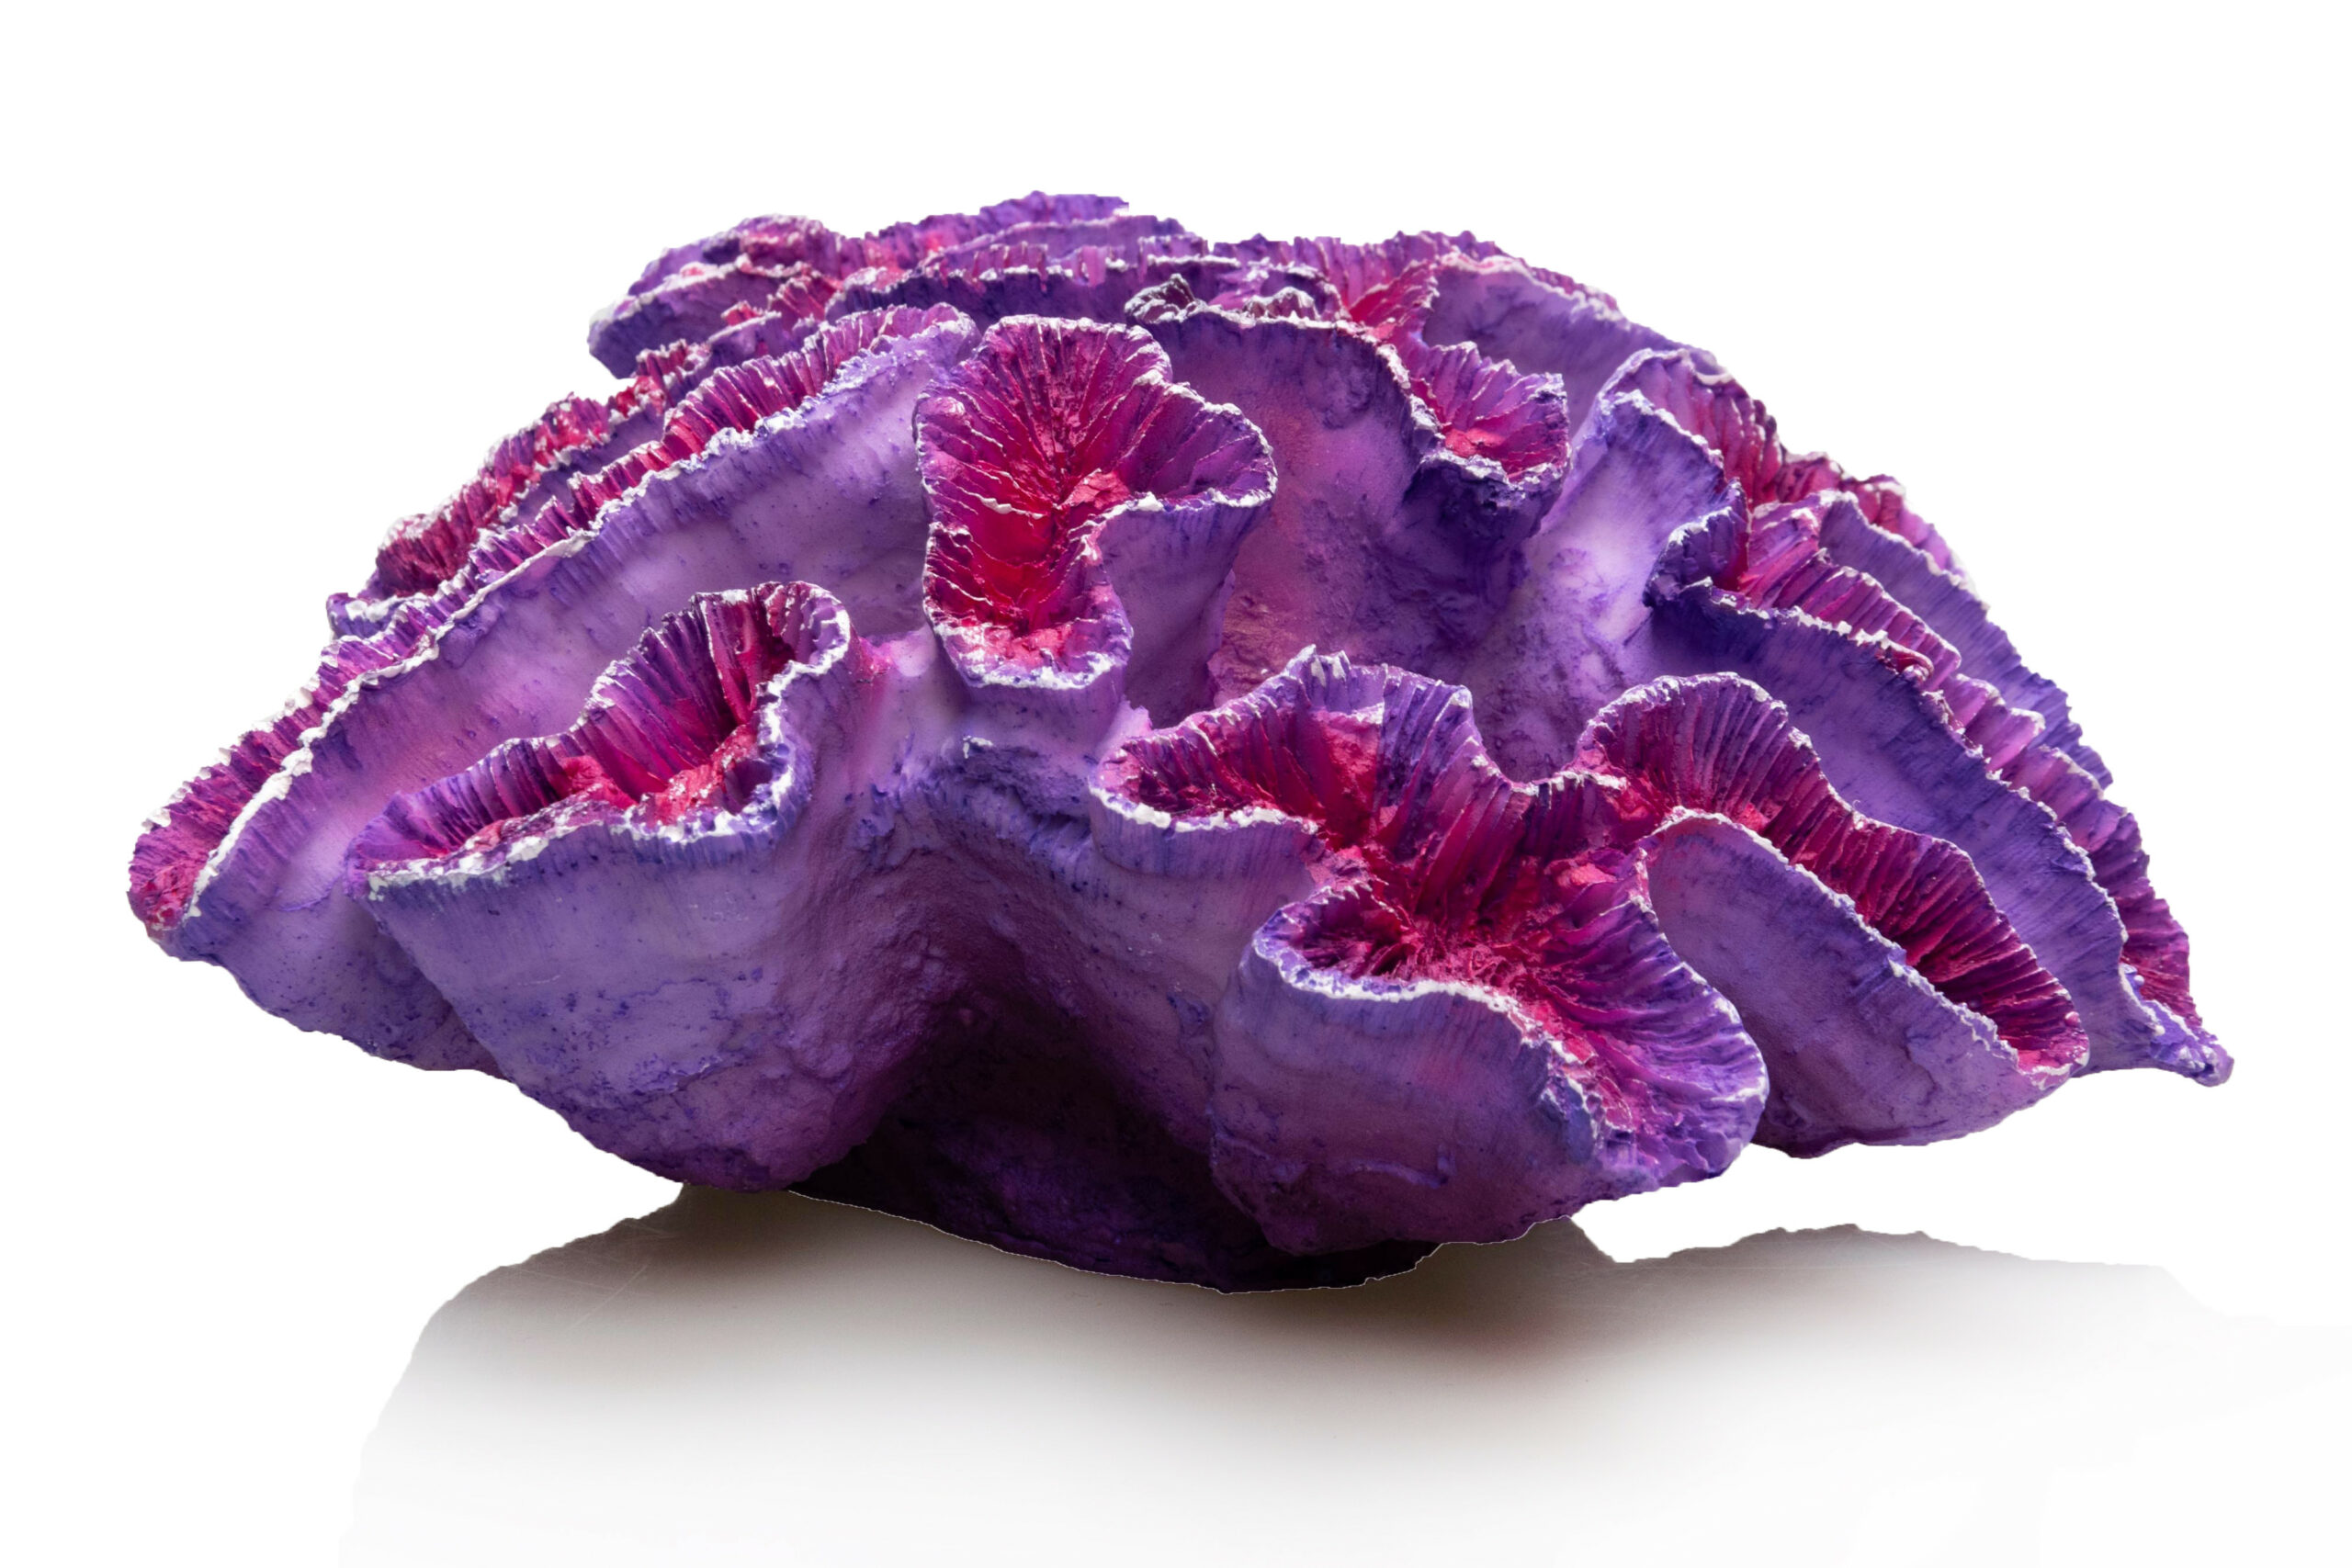 GiganAqua – Τεχνητό κοράλλι για ενυδρείο 16,5x14x17cm 